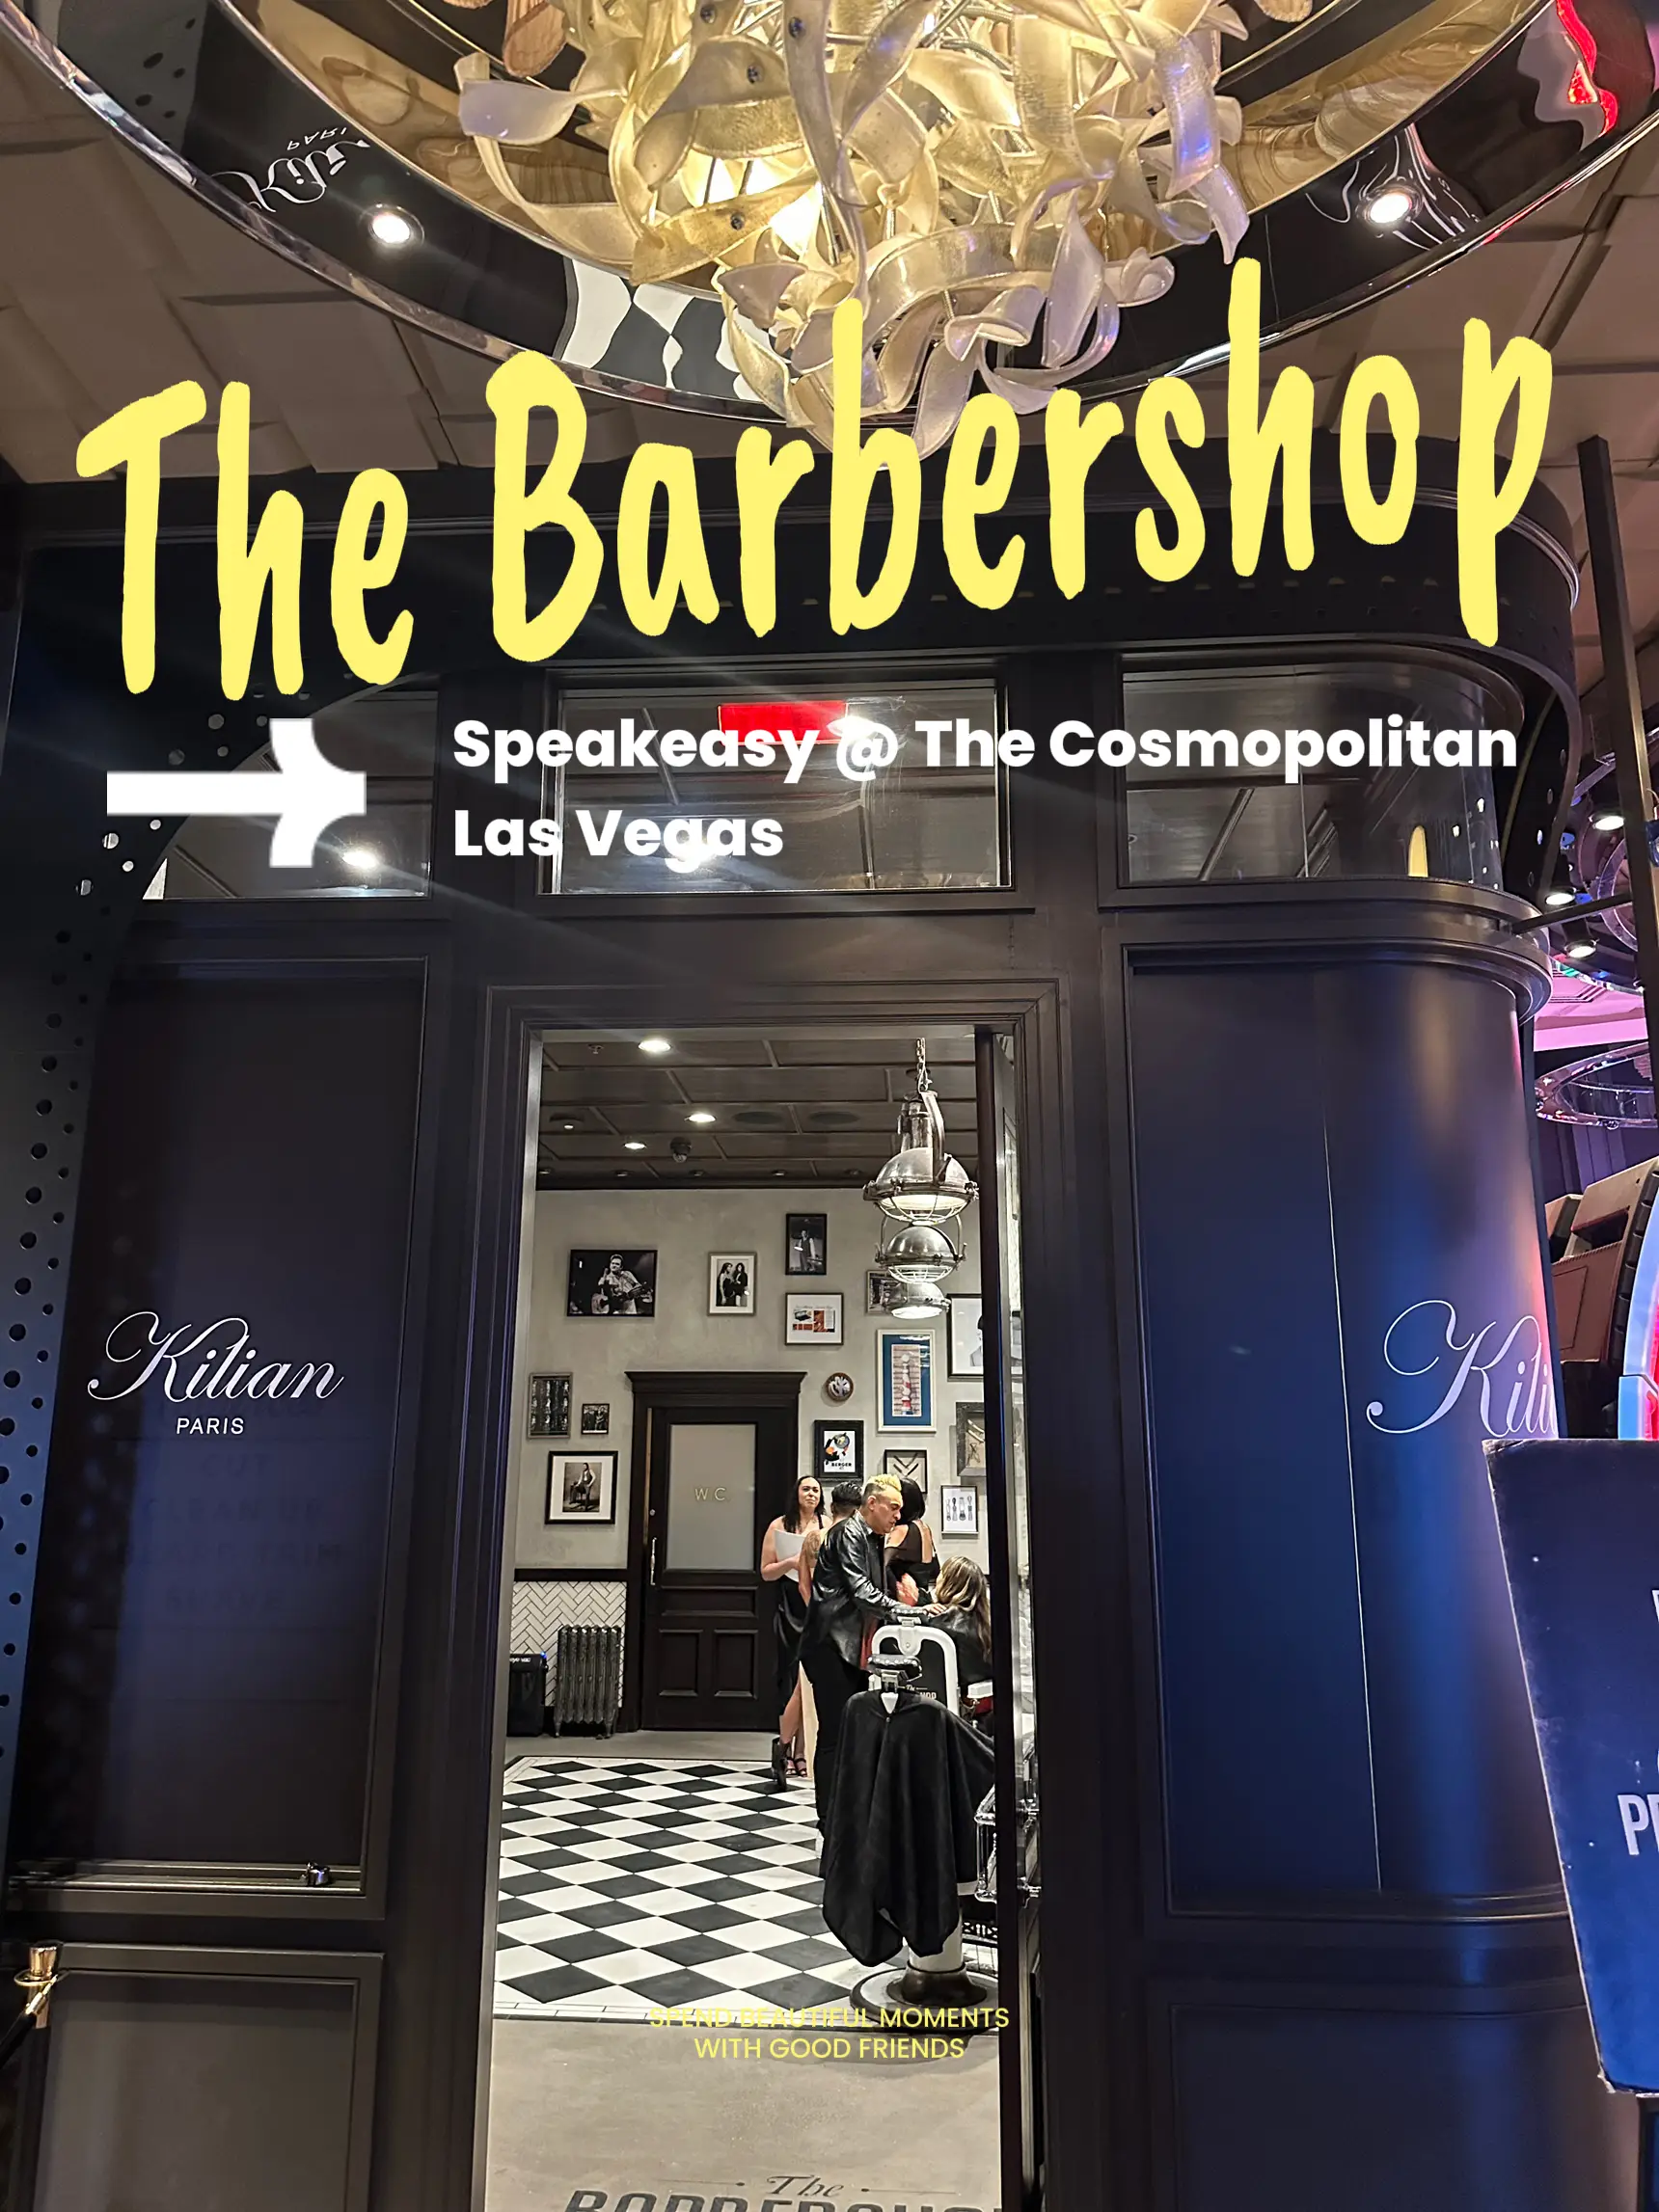 How To Find The Barbershop Speakeasy at Cosmopolitan